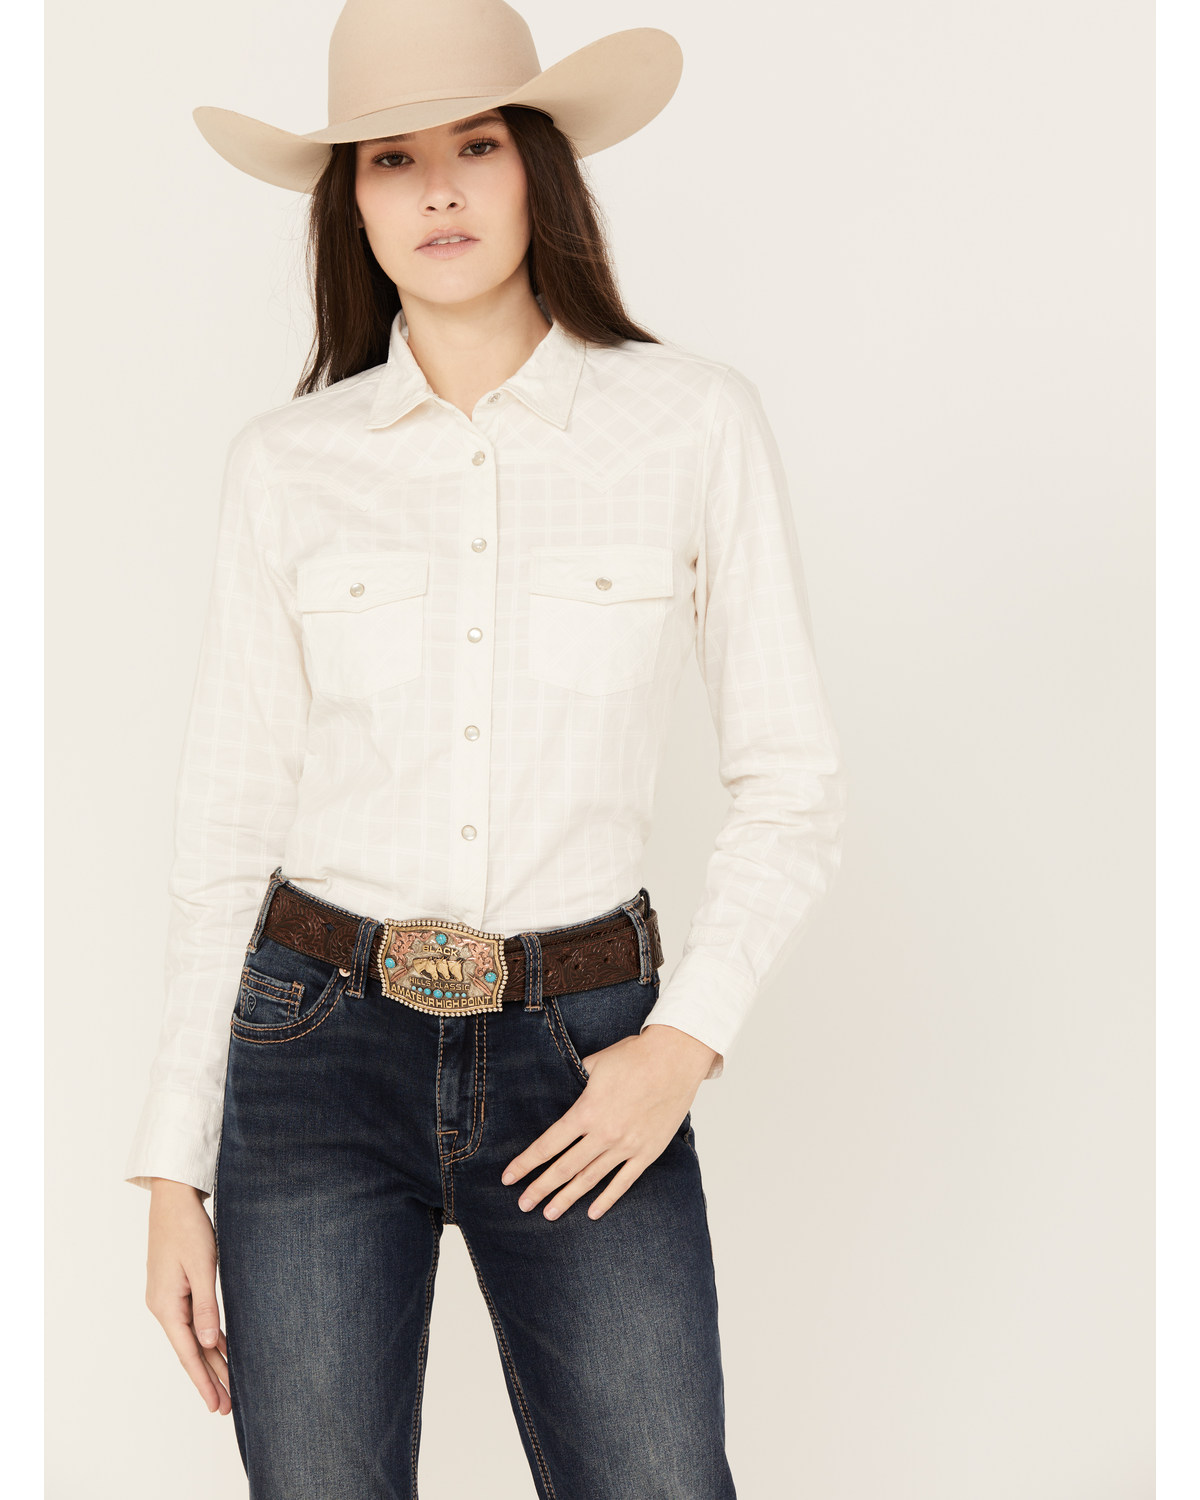 RANK 45® Women's Textured Long Sleeve Pearl Snap Western Riding Shirt